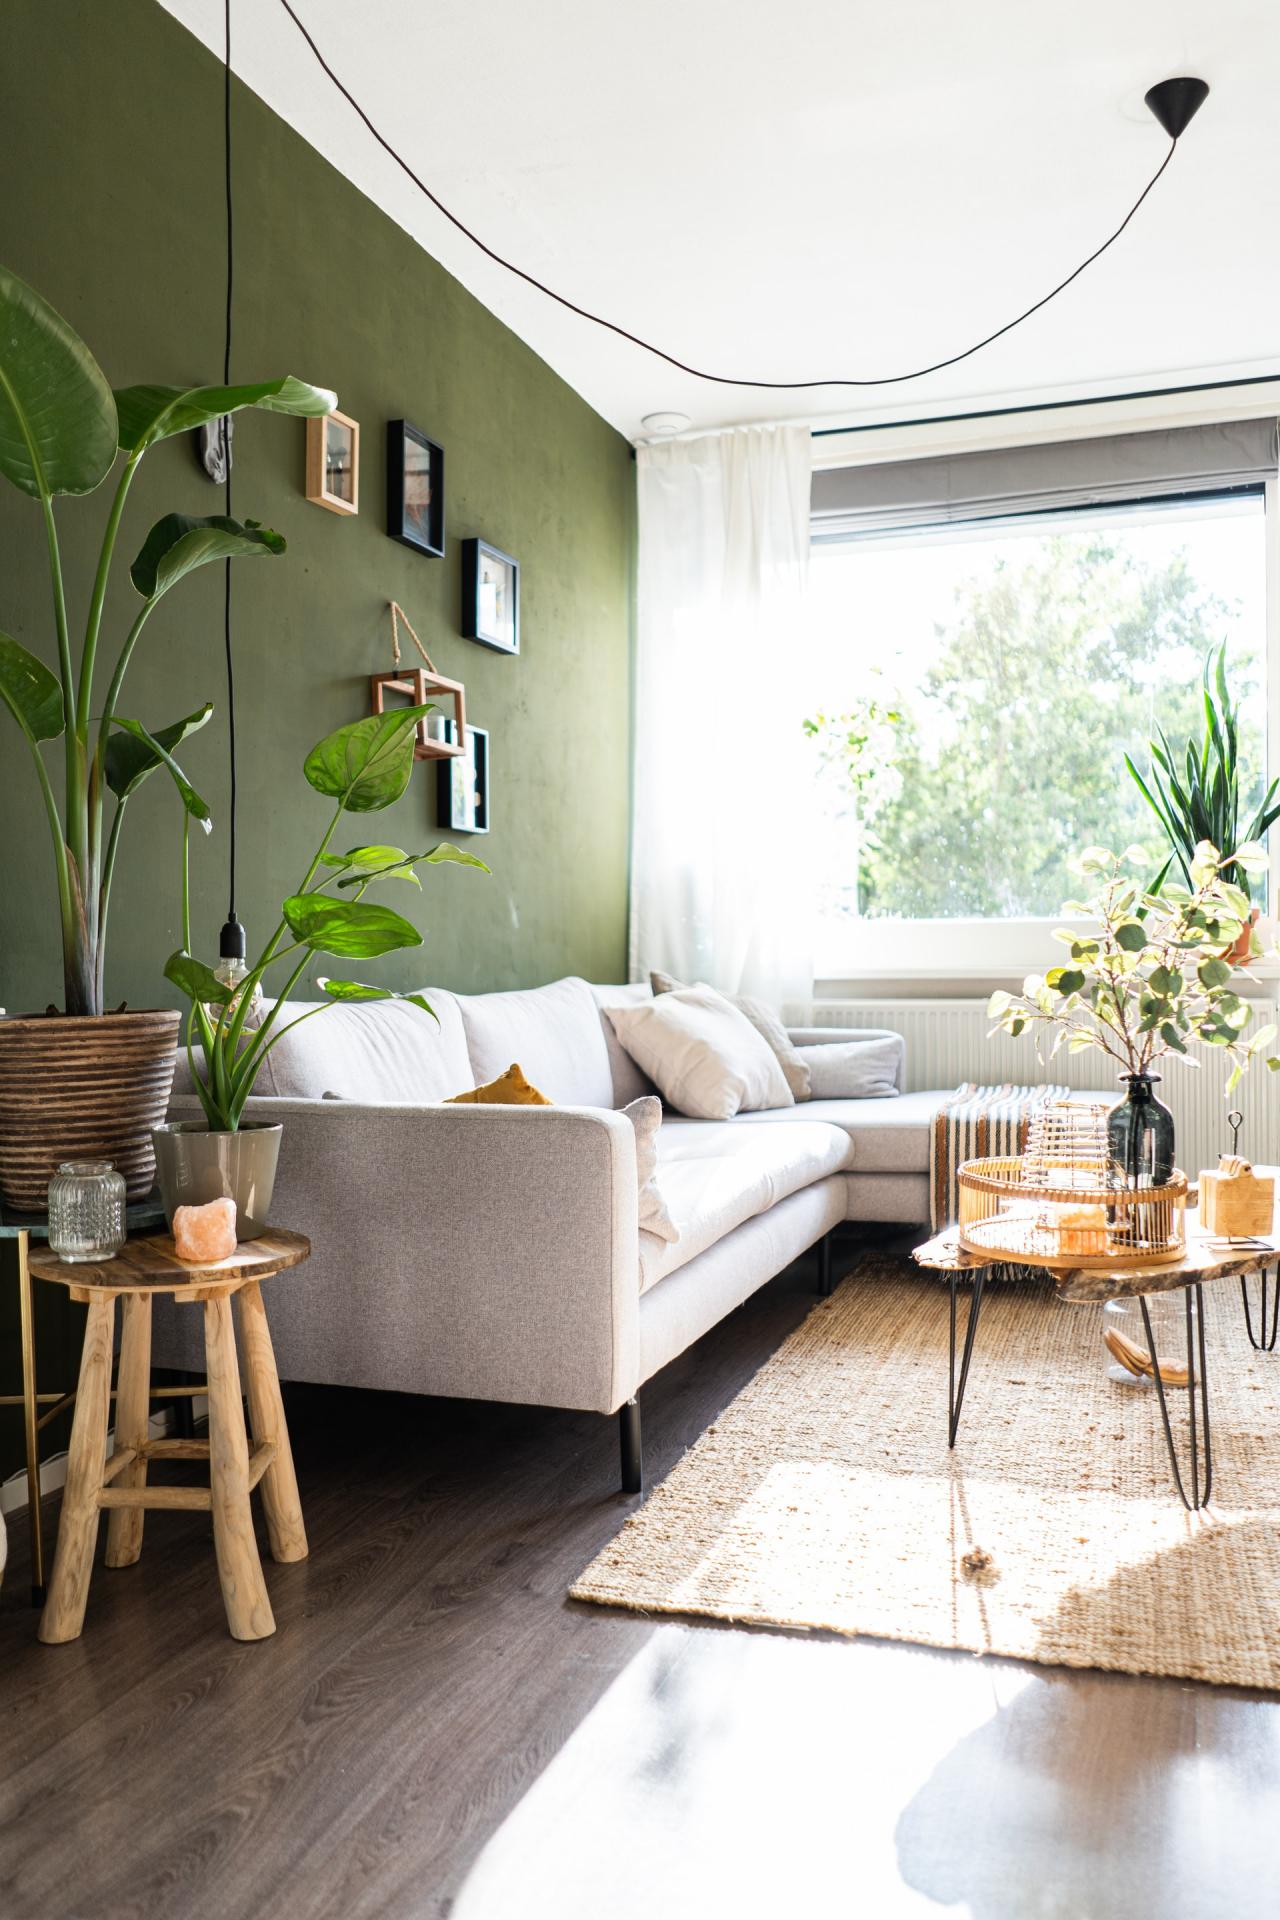 7 Best Indoor Plants to Decorate Your Home